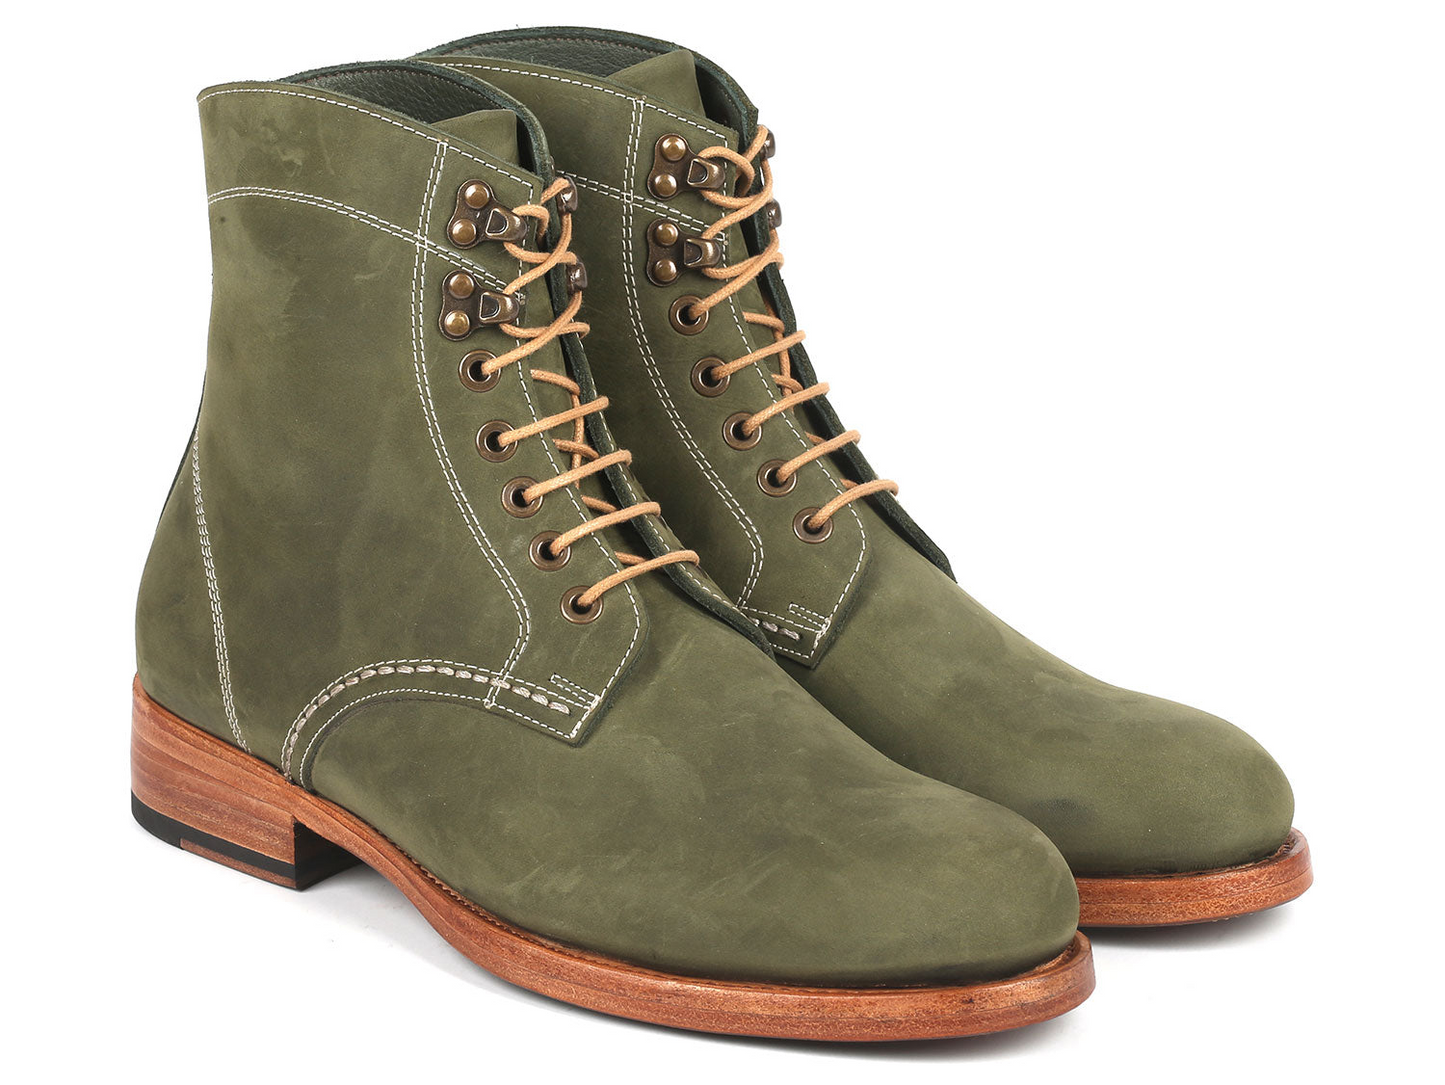 Green Nubuck boots, Handmade to order.